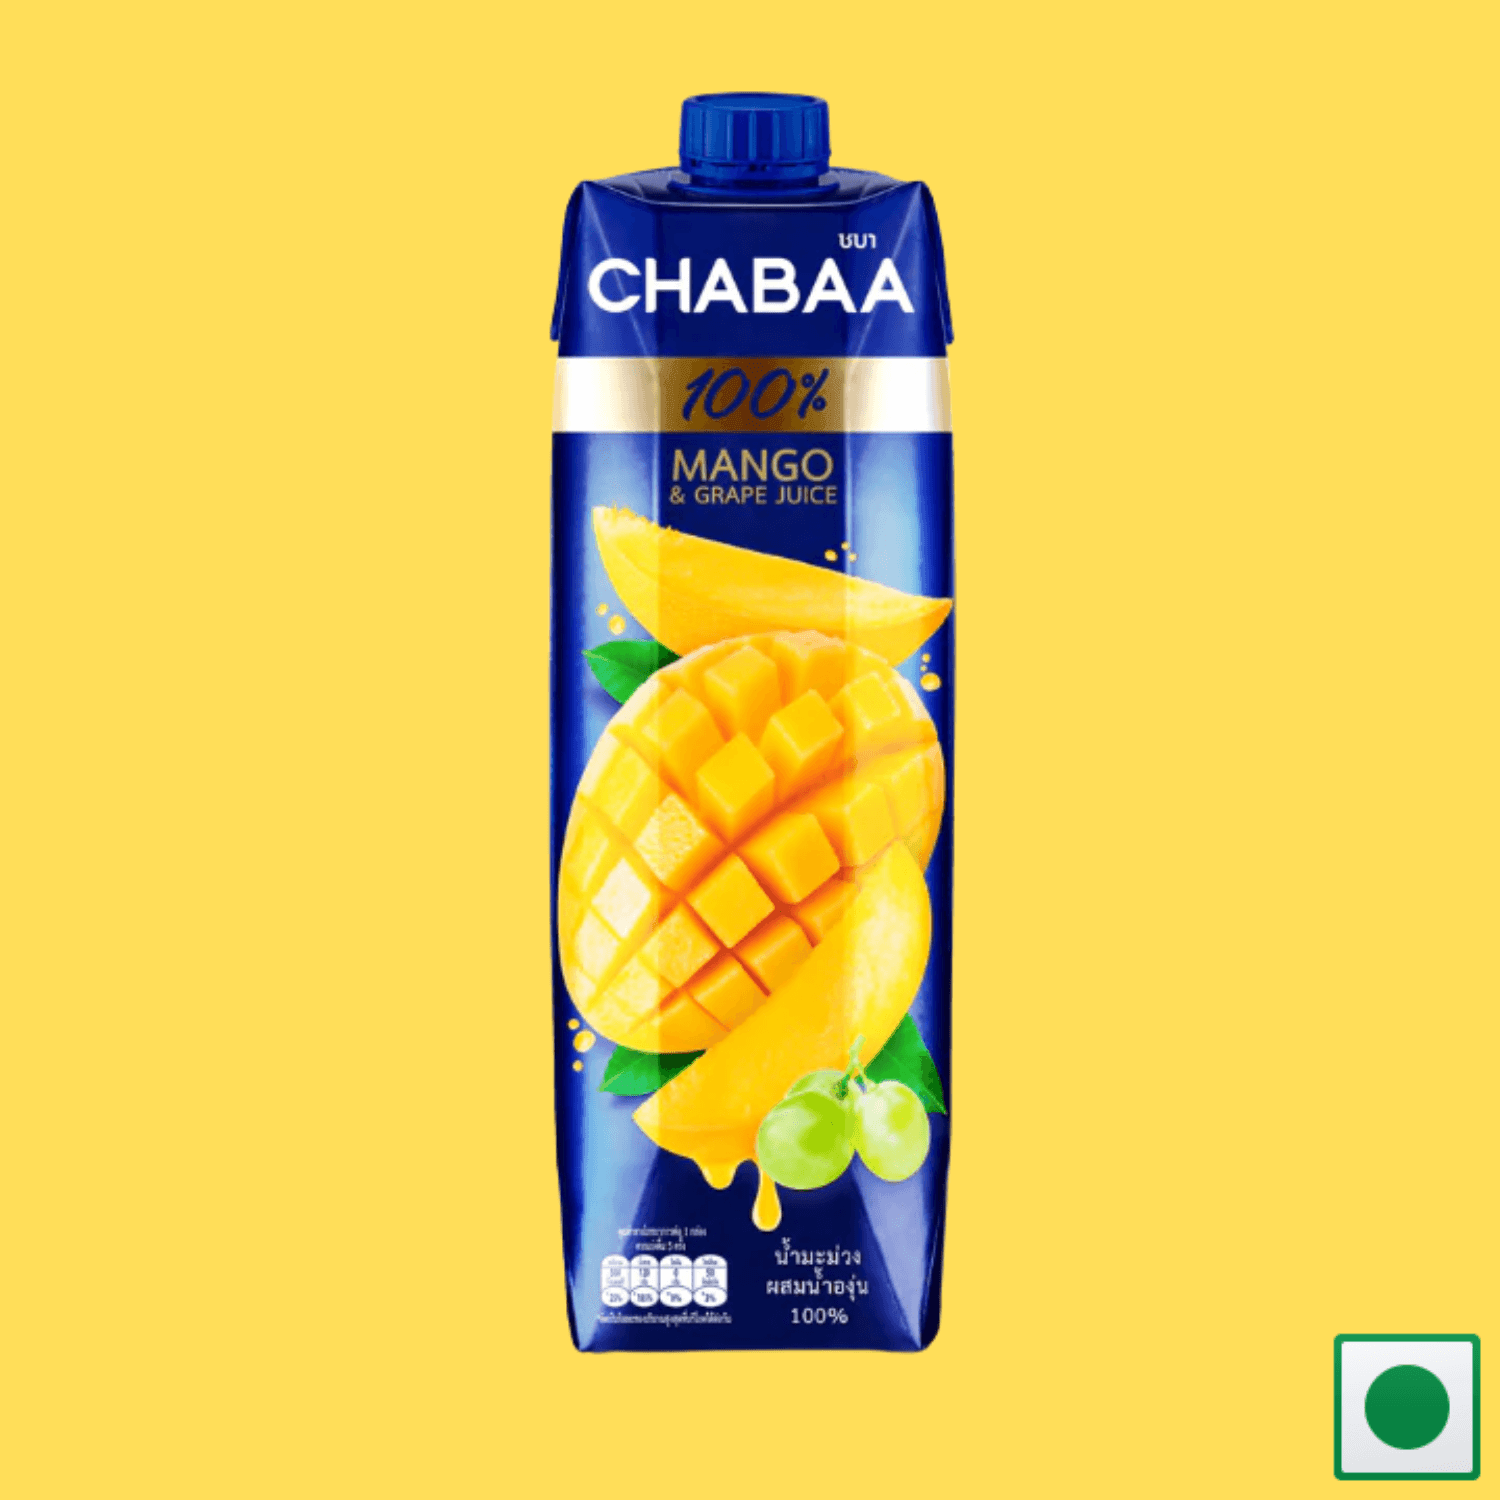 Chabaa Juice Mango and Grape Juice 1L (Imported) - Super 7 Mart